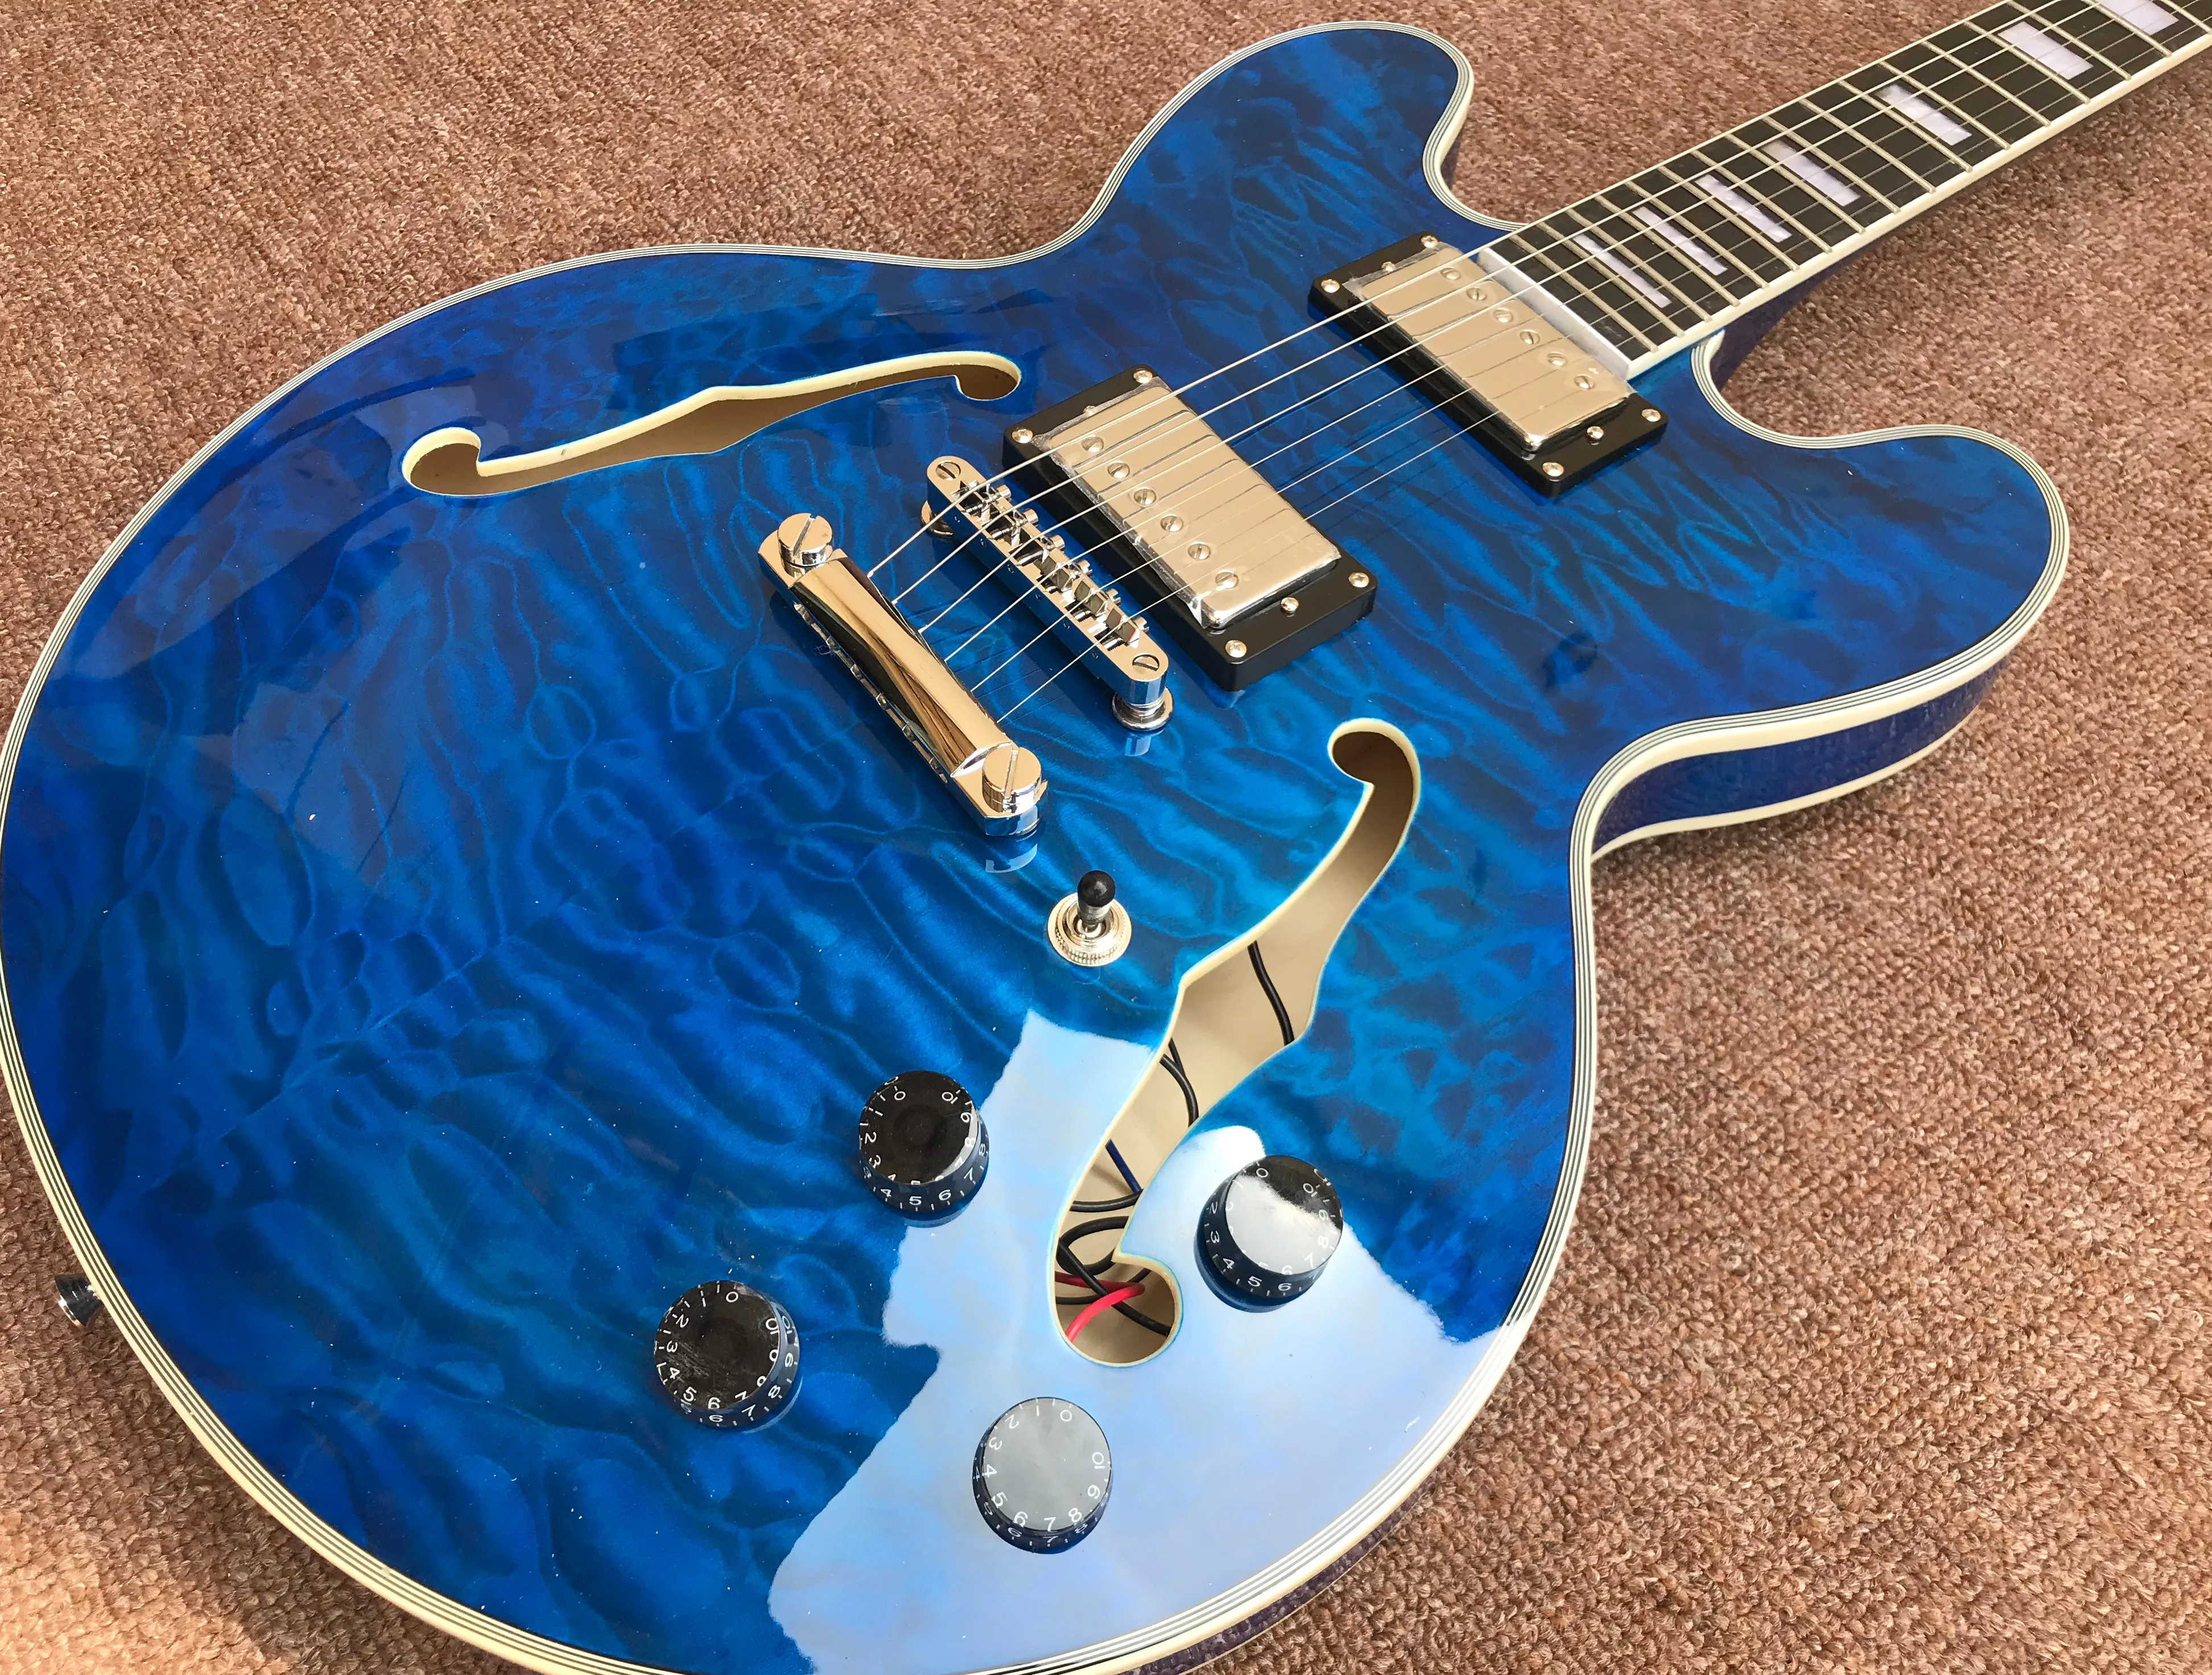 Guitarra elétrica blue jazz duplo acolchoado maple ferragens douradas 349 m